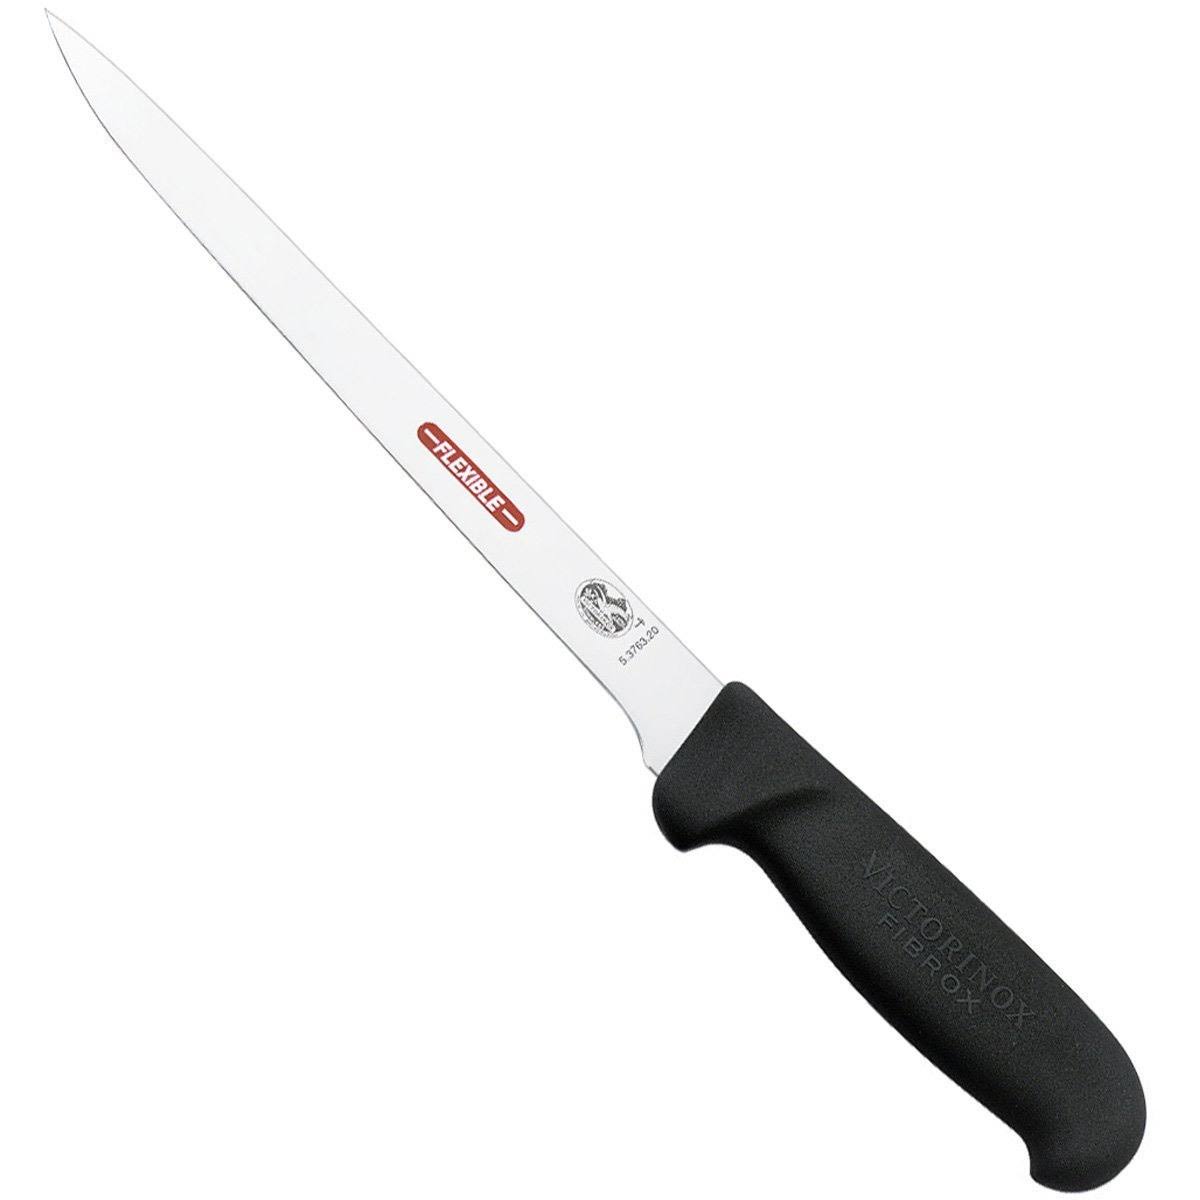 Victorinox Fibrox 8 in. Flexible Fillet Knife